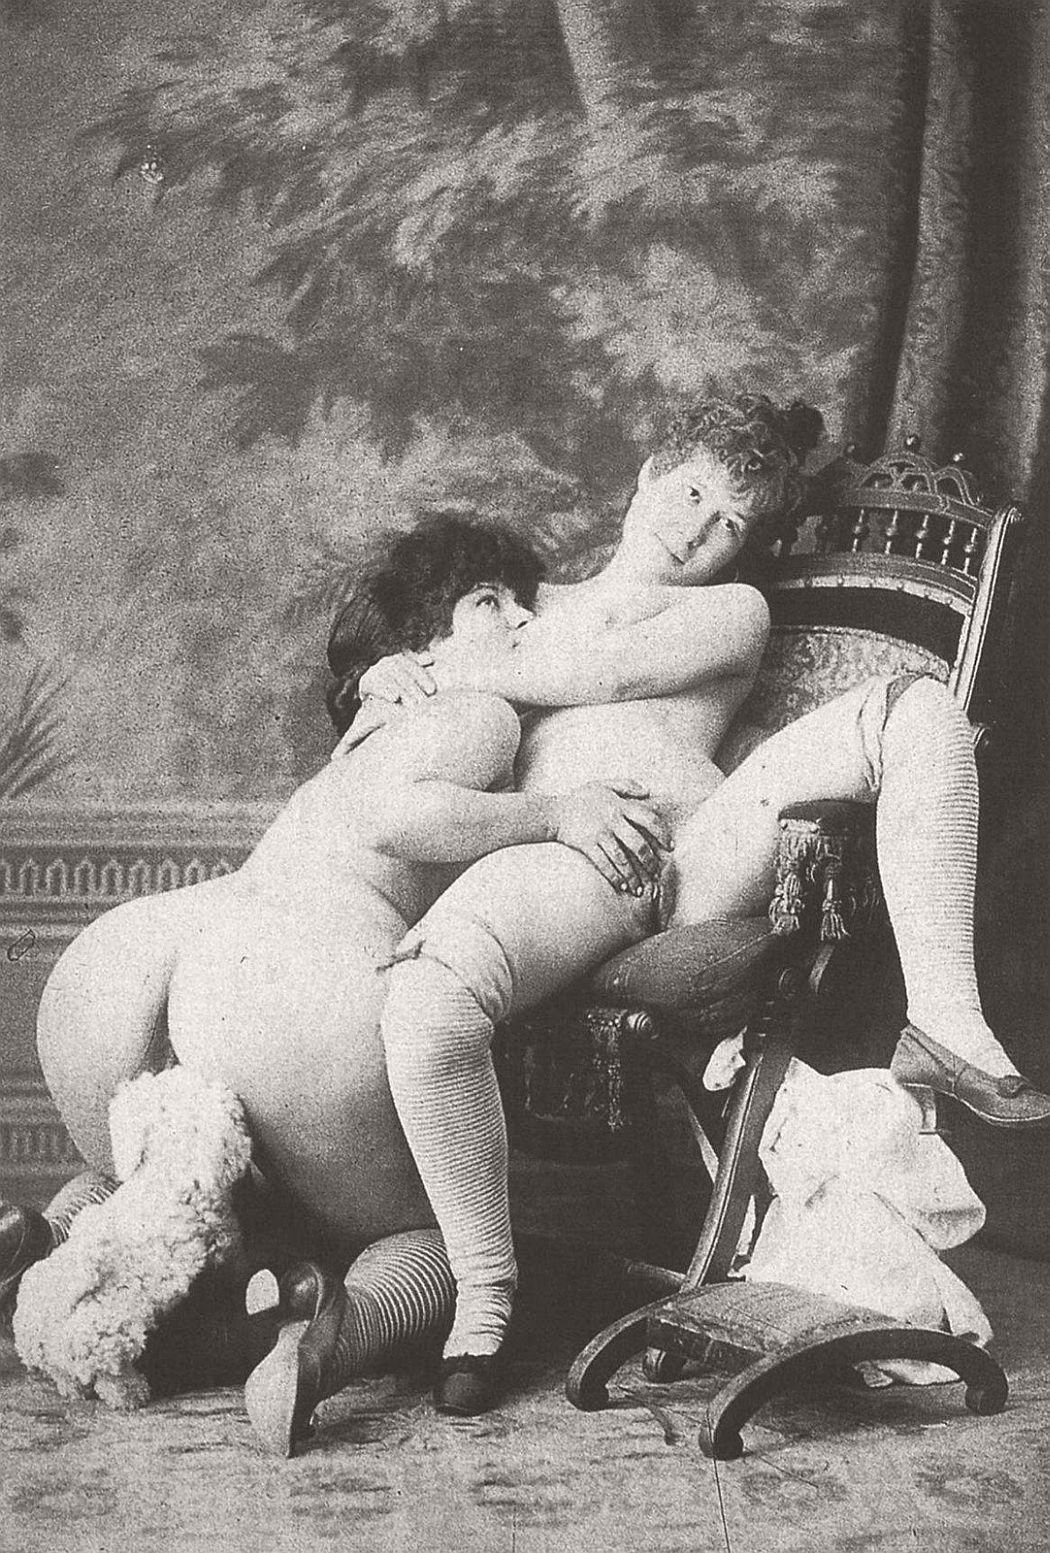 Porn in the 19th century